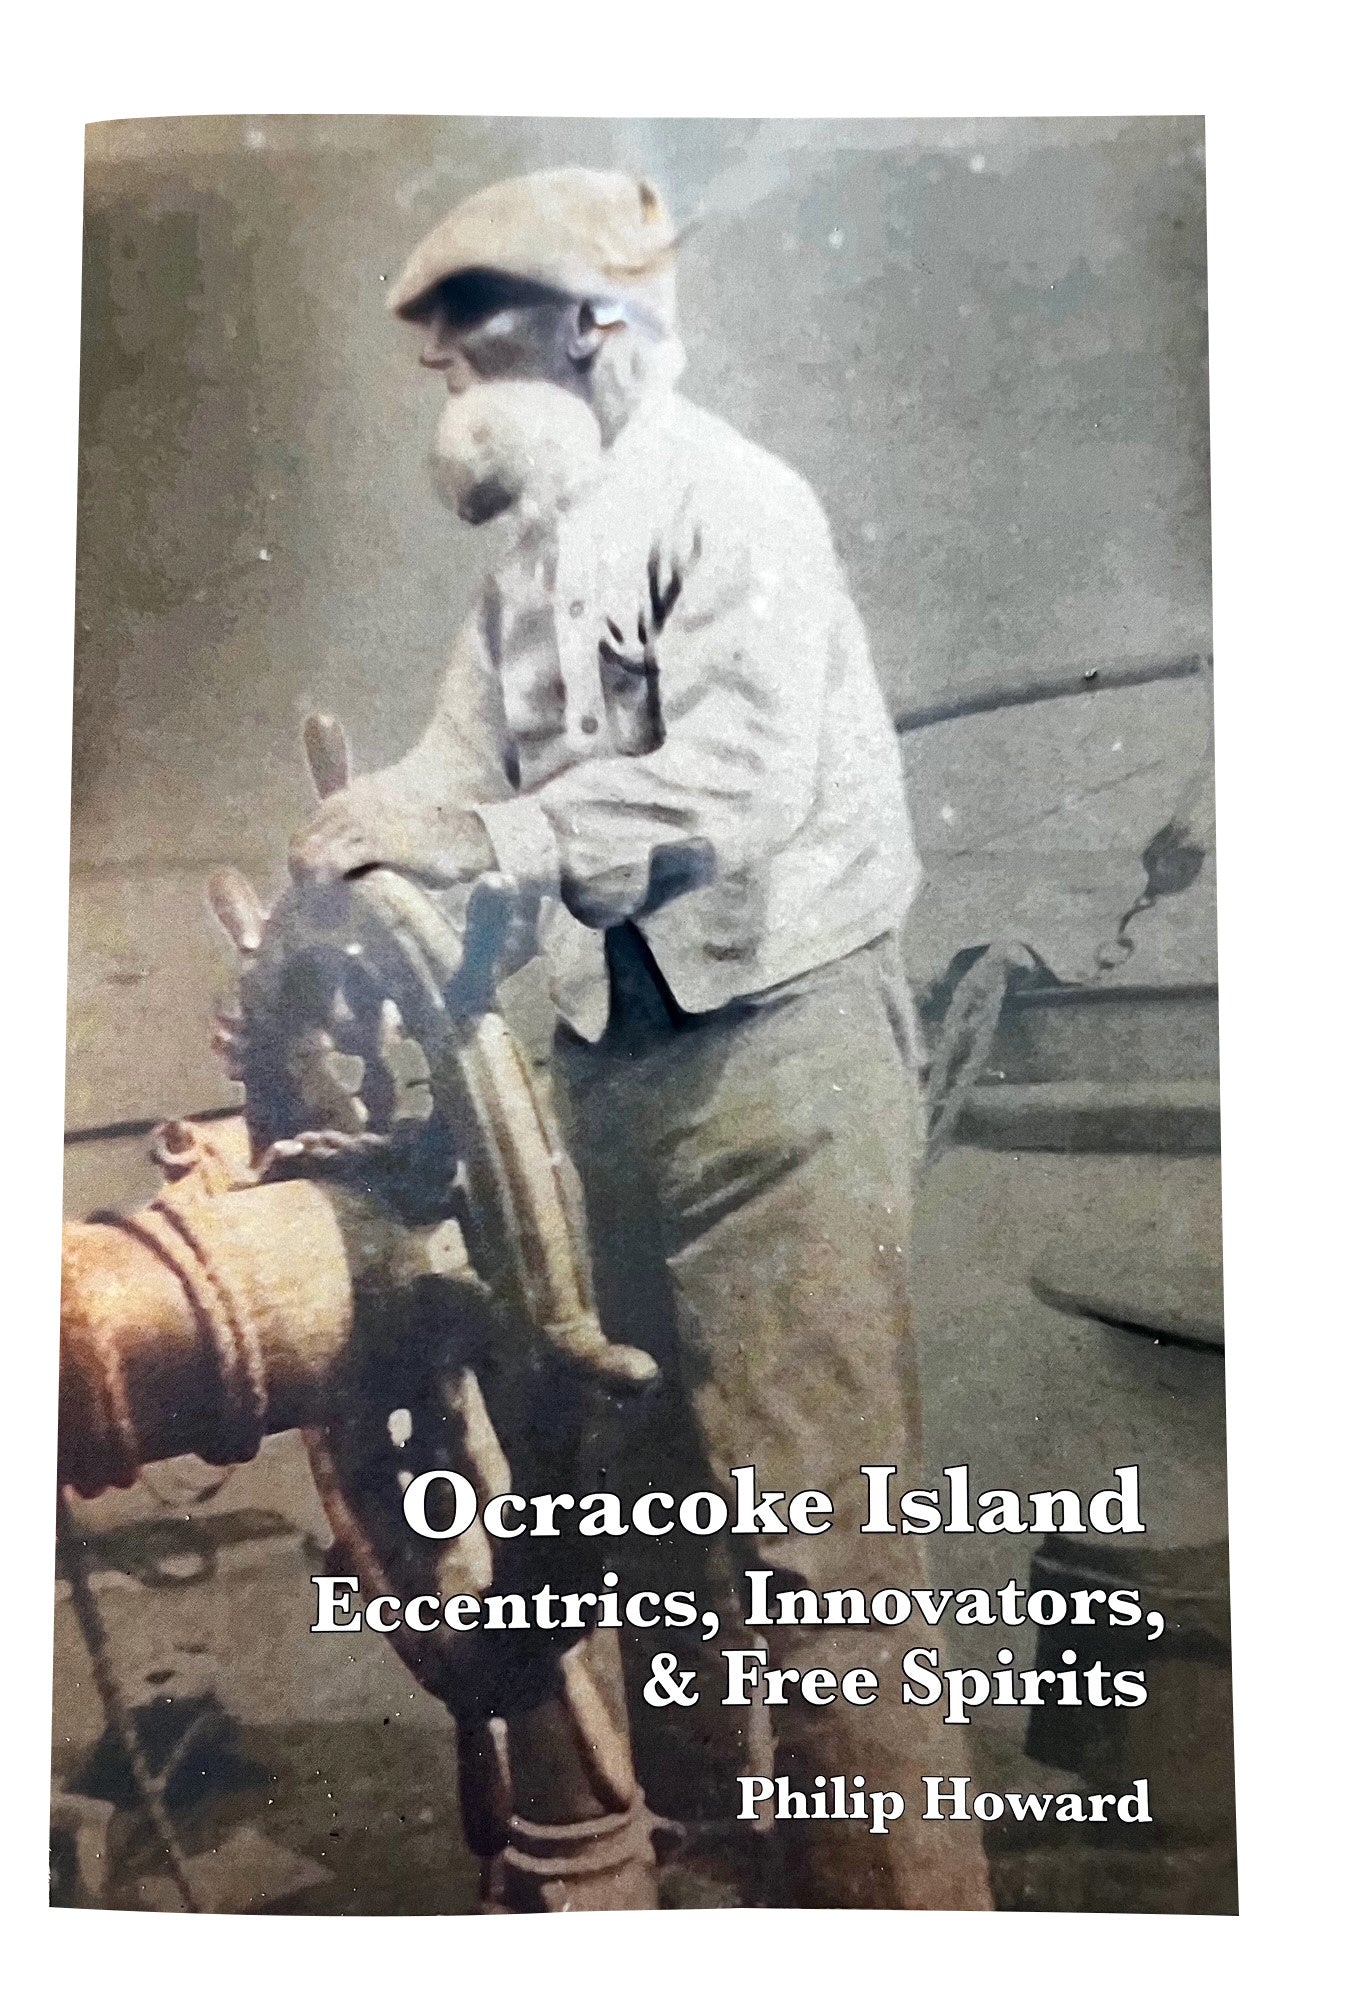 Ocracoke Island Eccentrics, Innovators, & Free Spirits